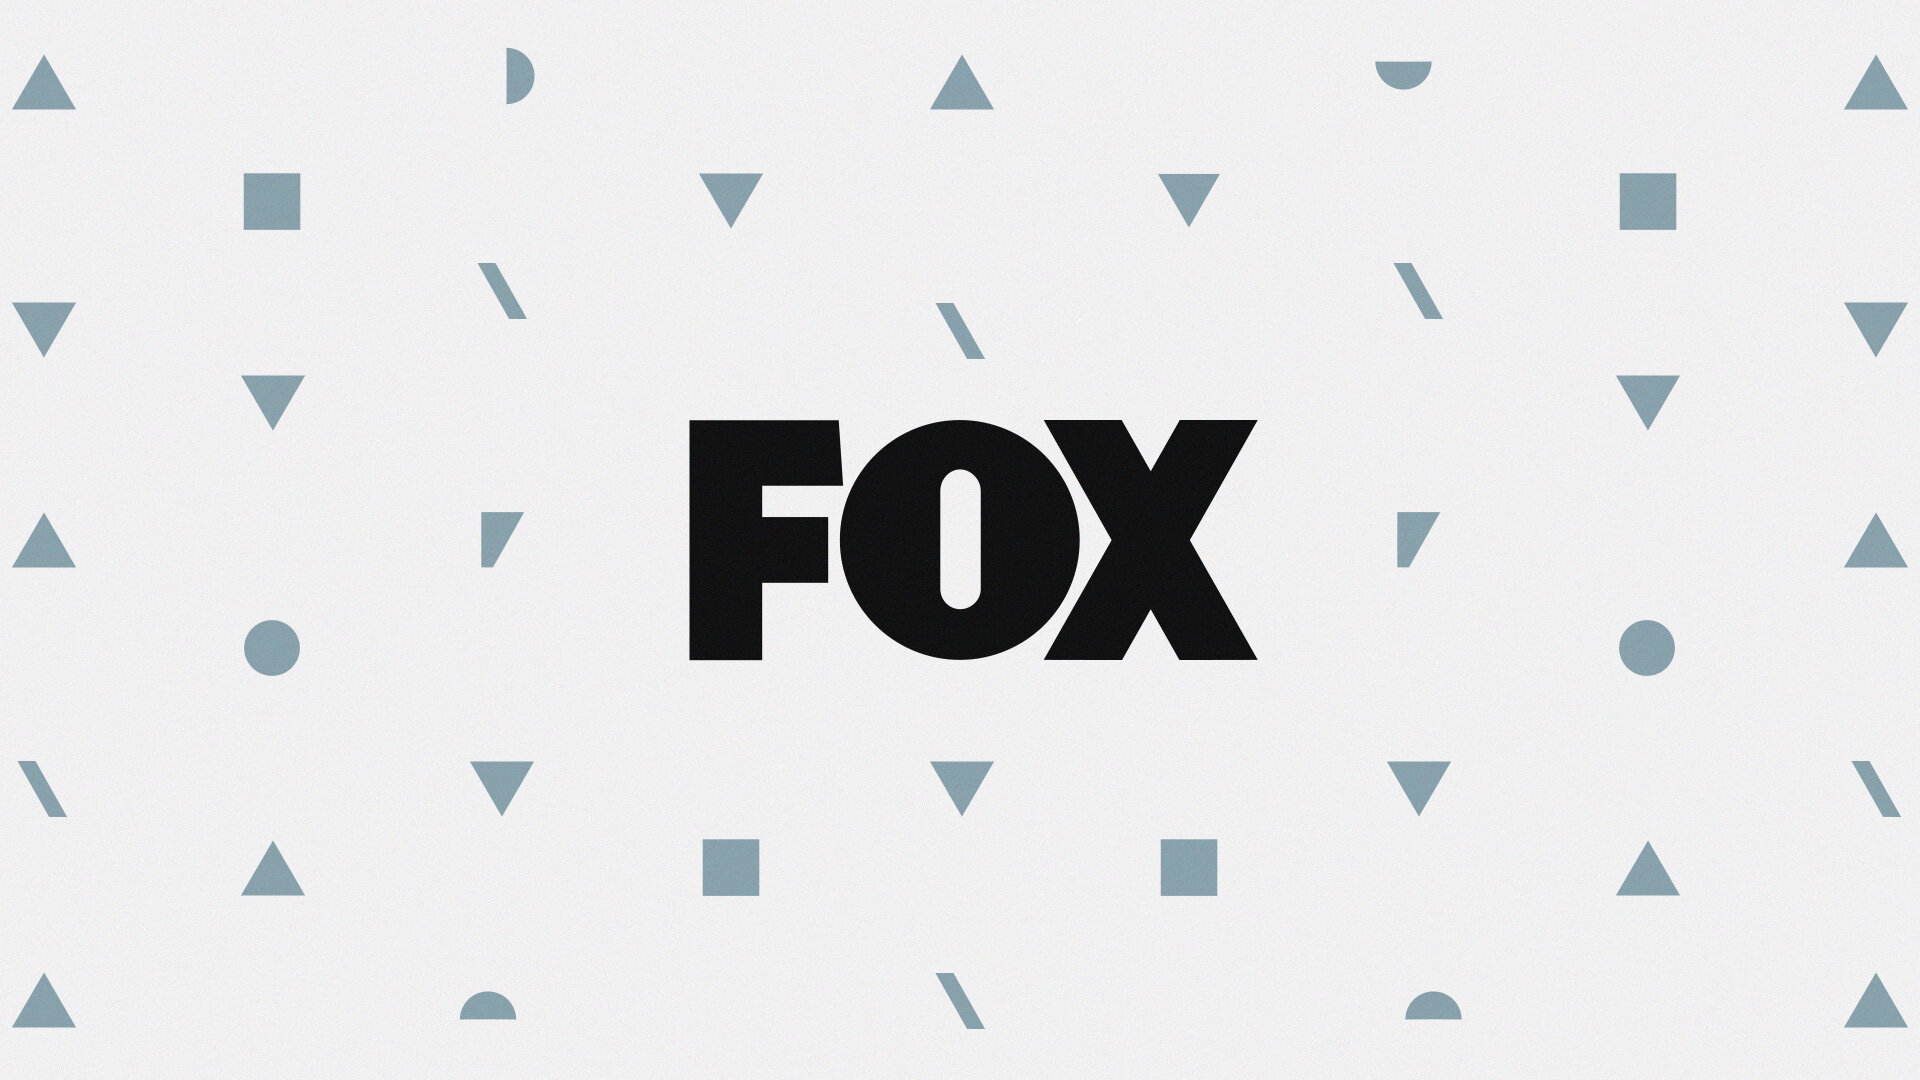 Fox entertainment. Телеканал Fox. CHROMADEX логотип. Пенфокс логотип. Магазин Фокс лого.